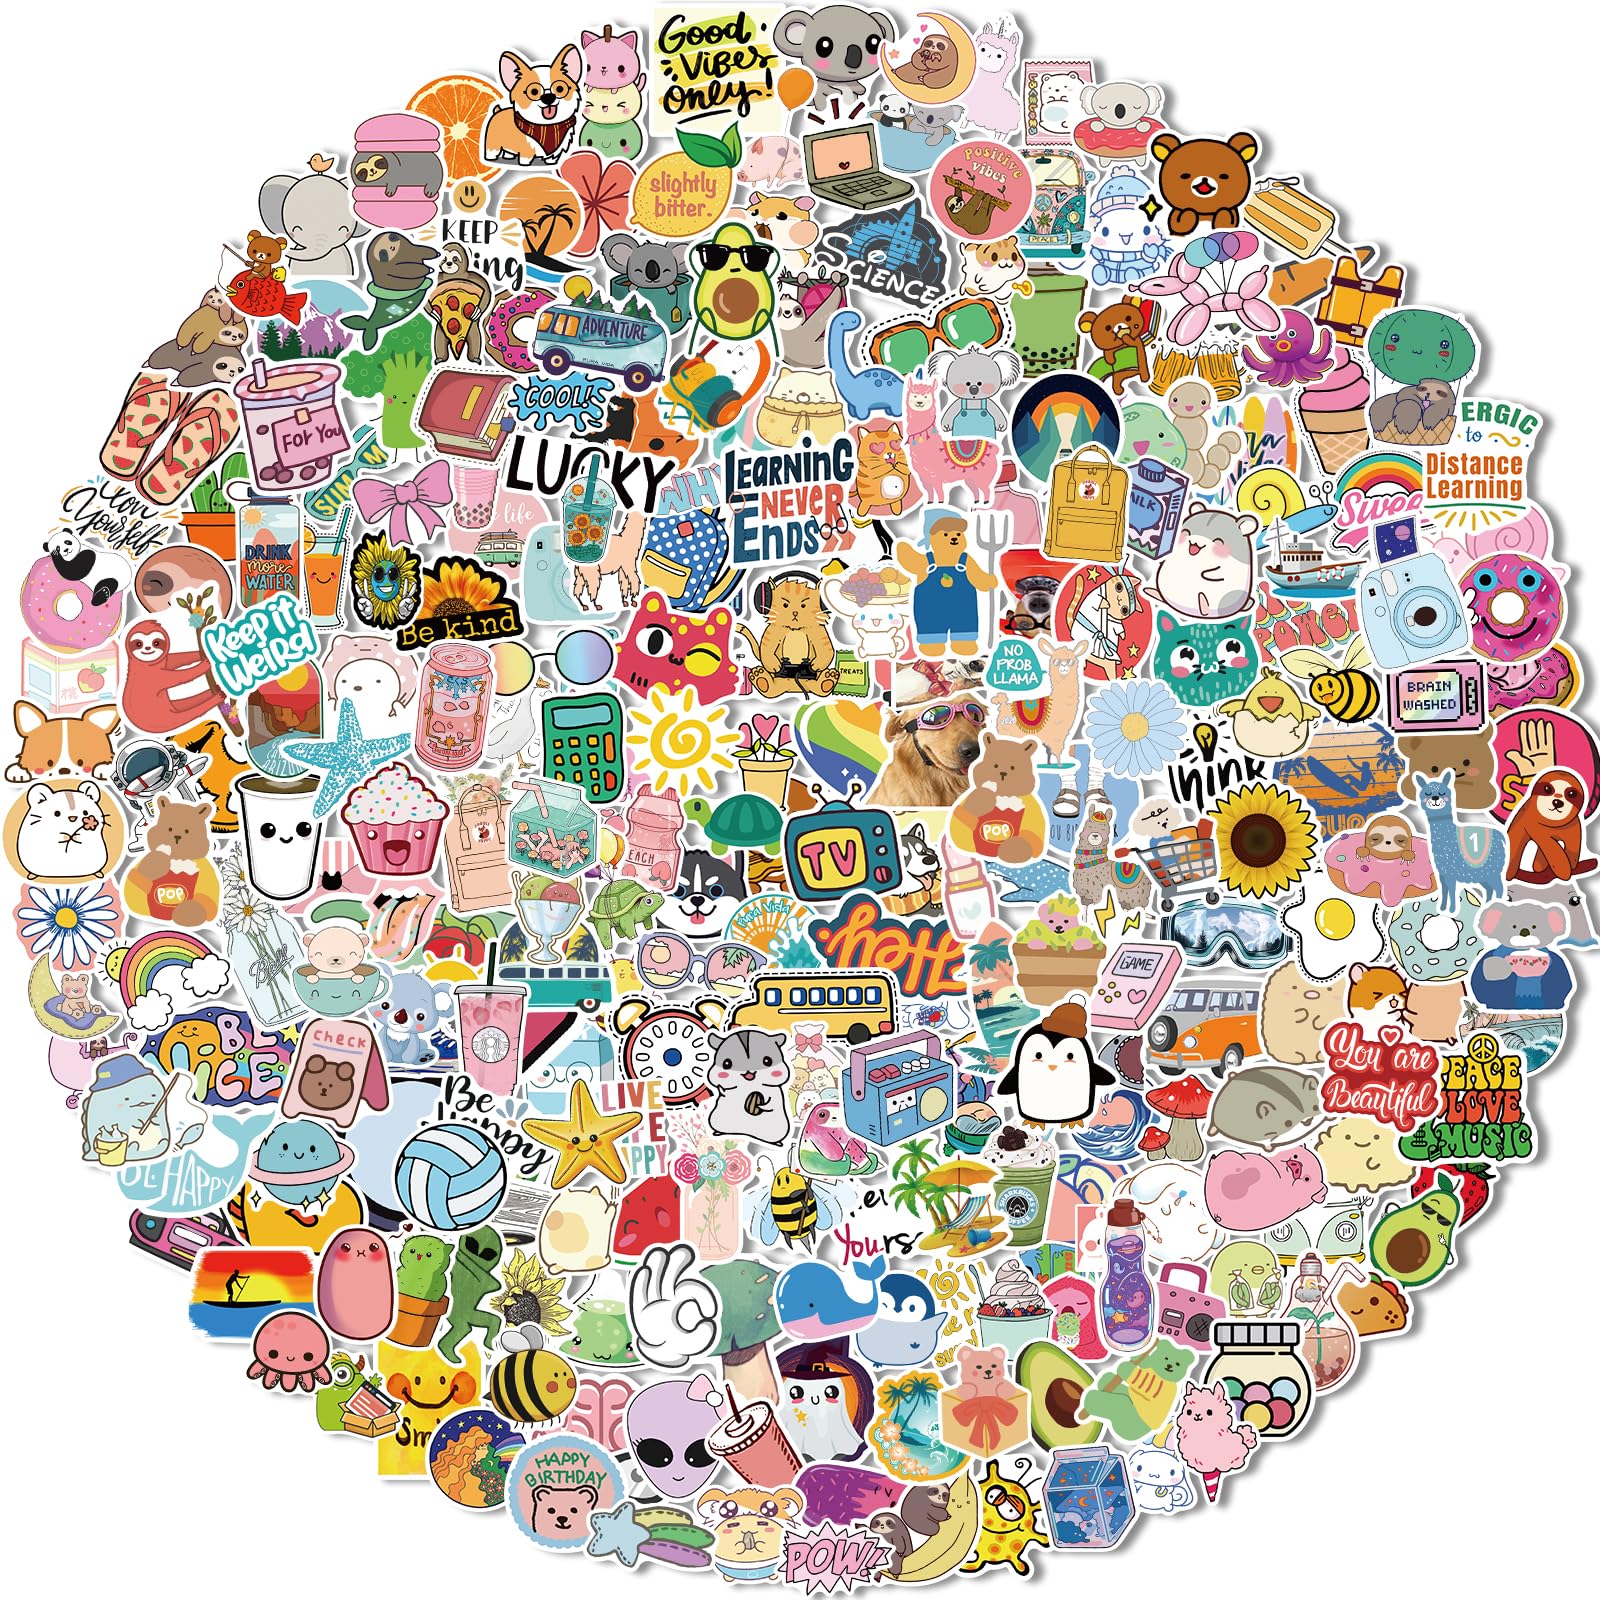 300 PCS Water Bottle Stickers for Kids Teens, Vinyl Vsco Waterproof Cute Aesthetic Stickers, Hydroflask Laptop Phone Skateboard Stickers for Teens Girls Kids, Sticker Packs